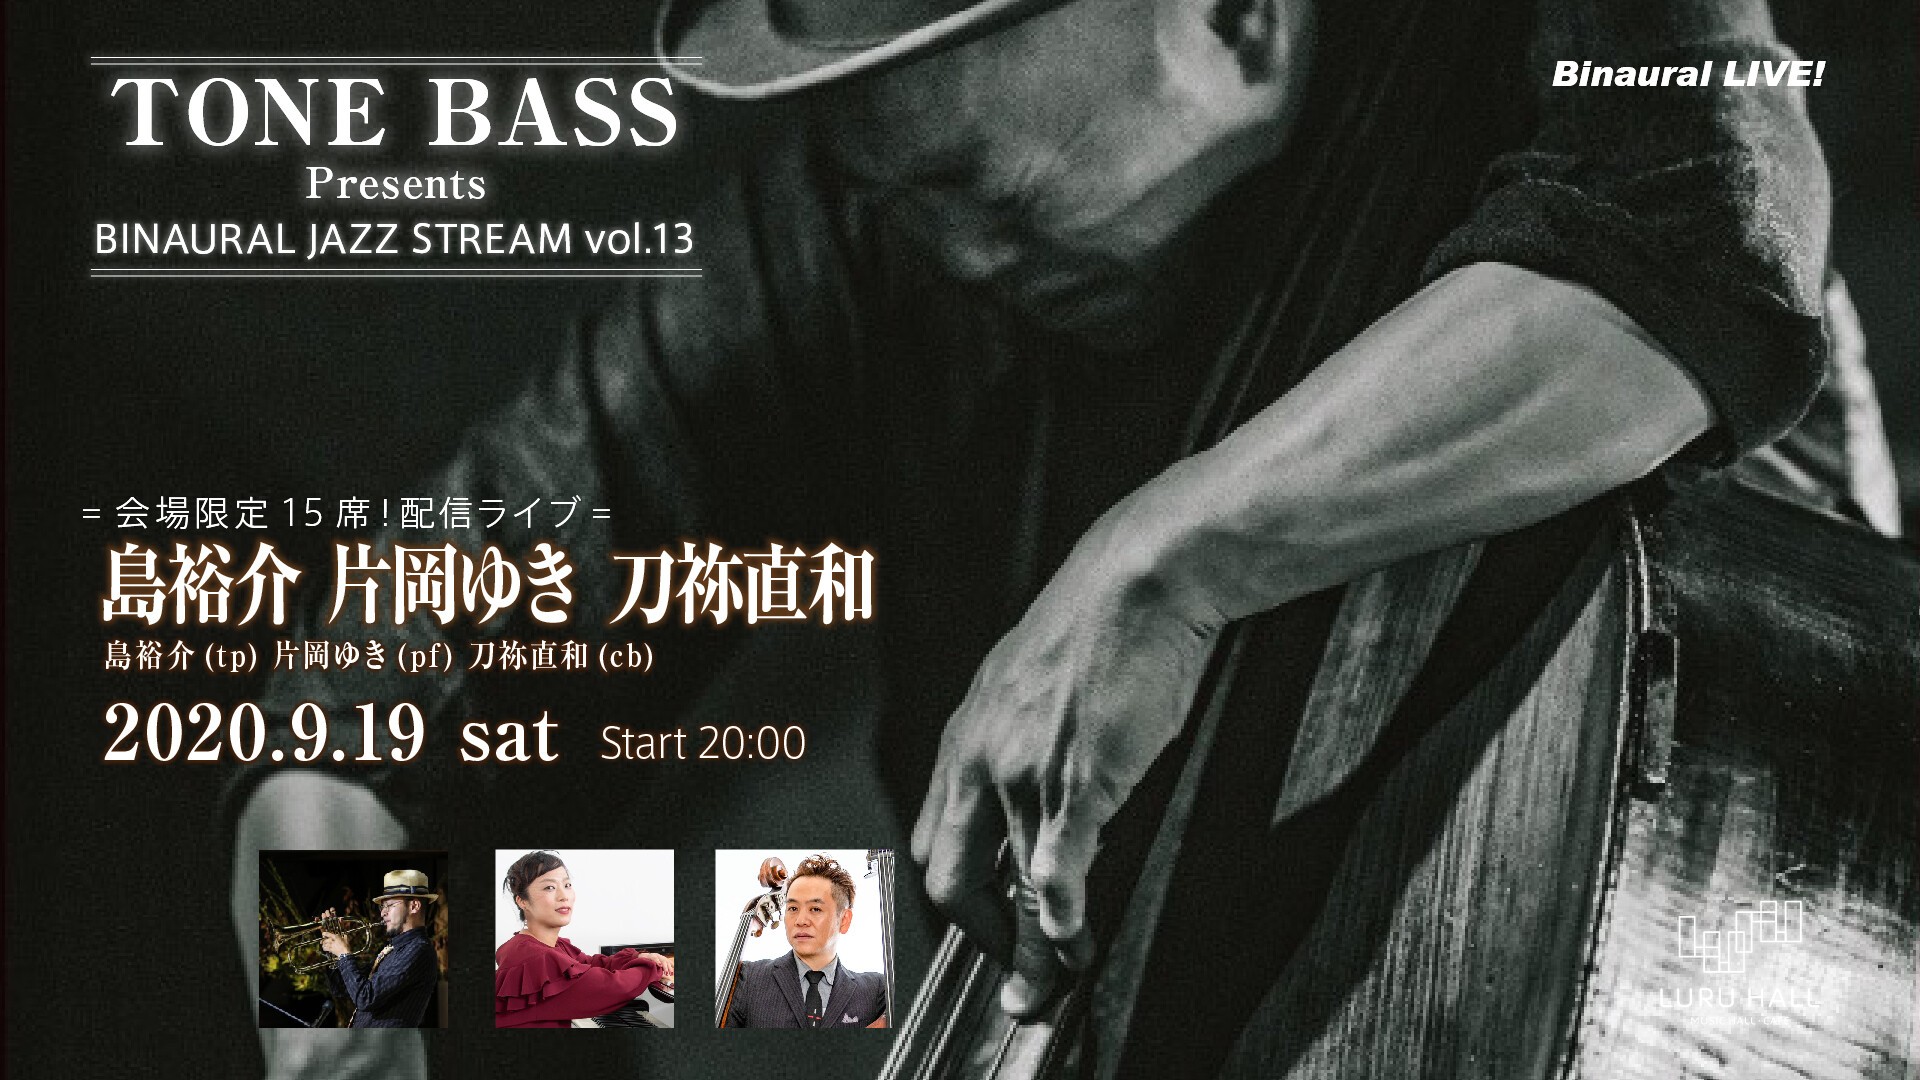 TONE BASS Presents BINAURAL JAZZ STREAM vol.13 09.19 (土) Online  Streaming LURU HALL Binaural LIVE!